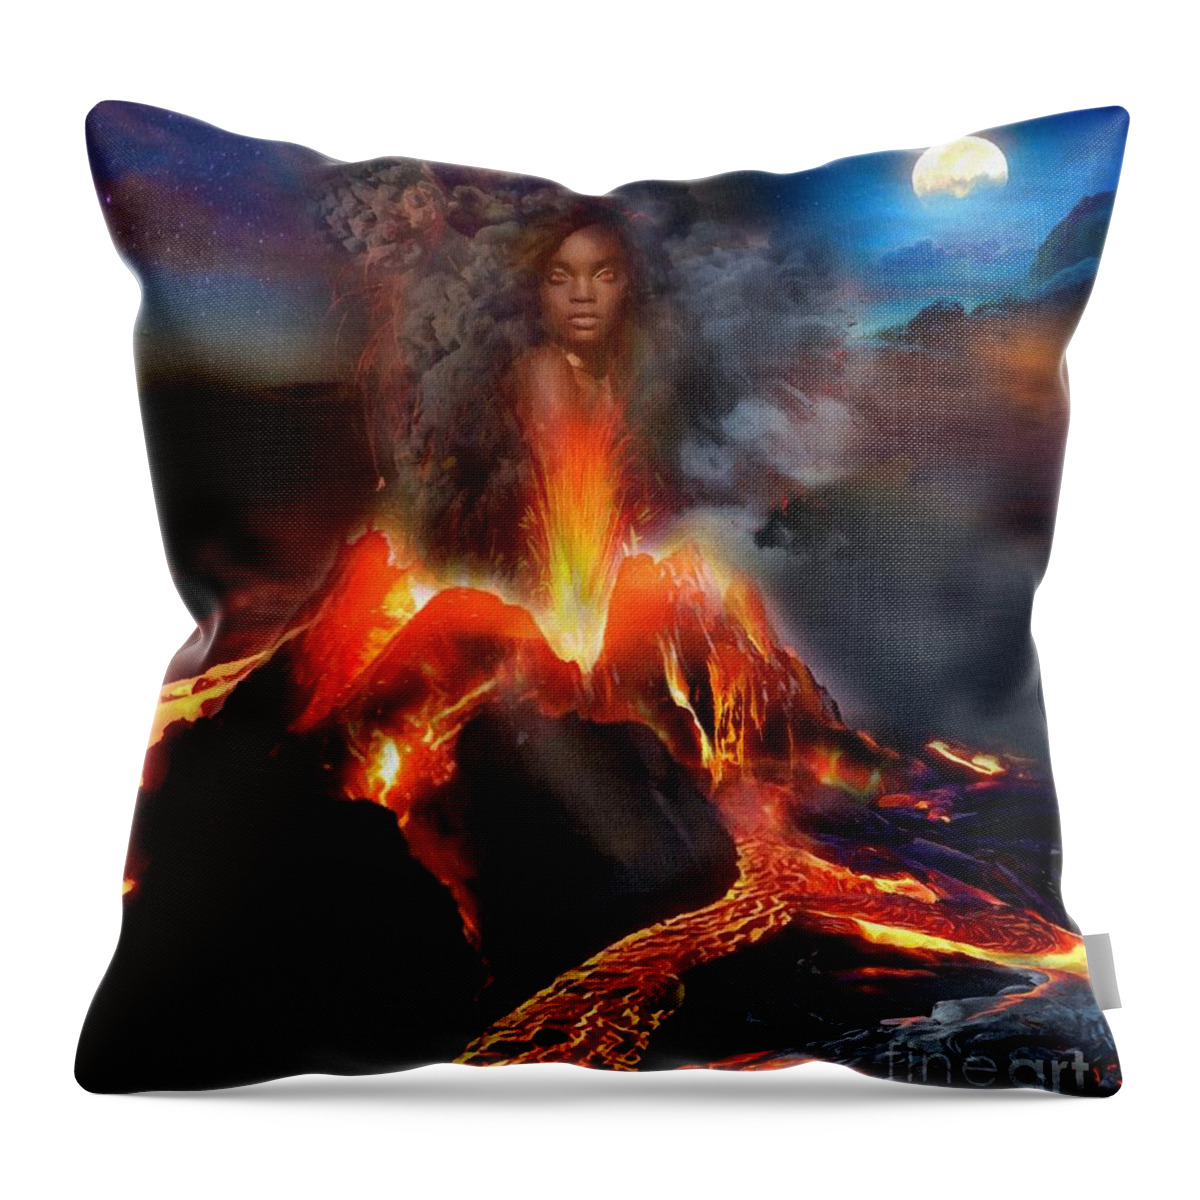 Pele - Volcano Goddess Throw Pillow featuring the mixed media Pele - Volcano Goddess by Carl Gouveia